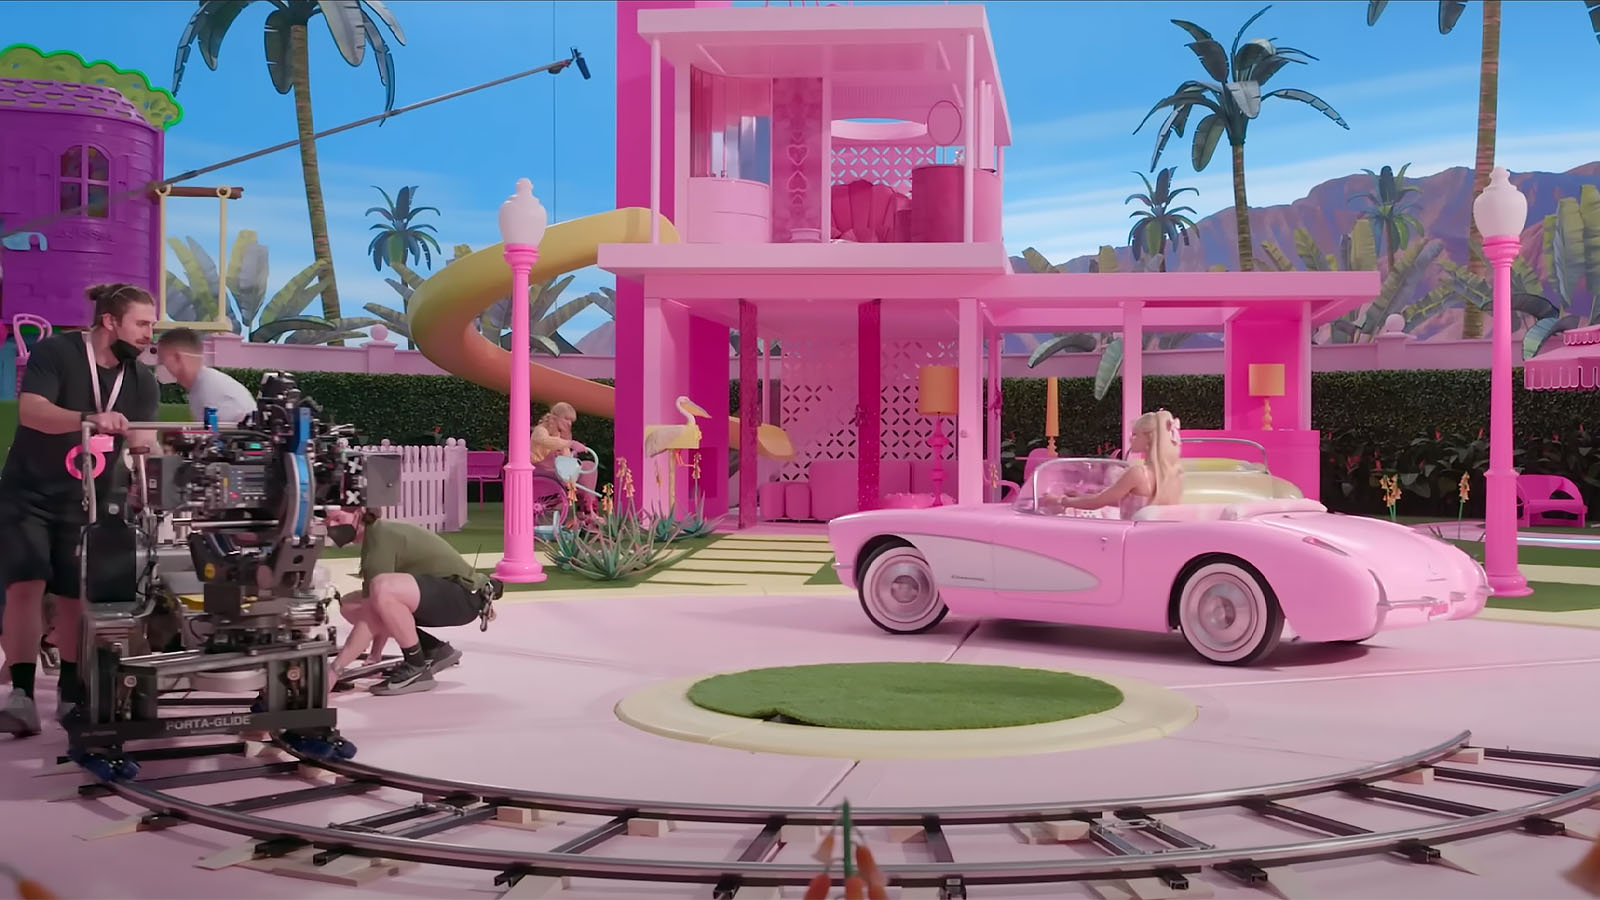 Orbit dolly shot tracks matches Barbie's circular driveway/